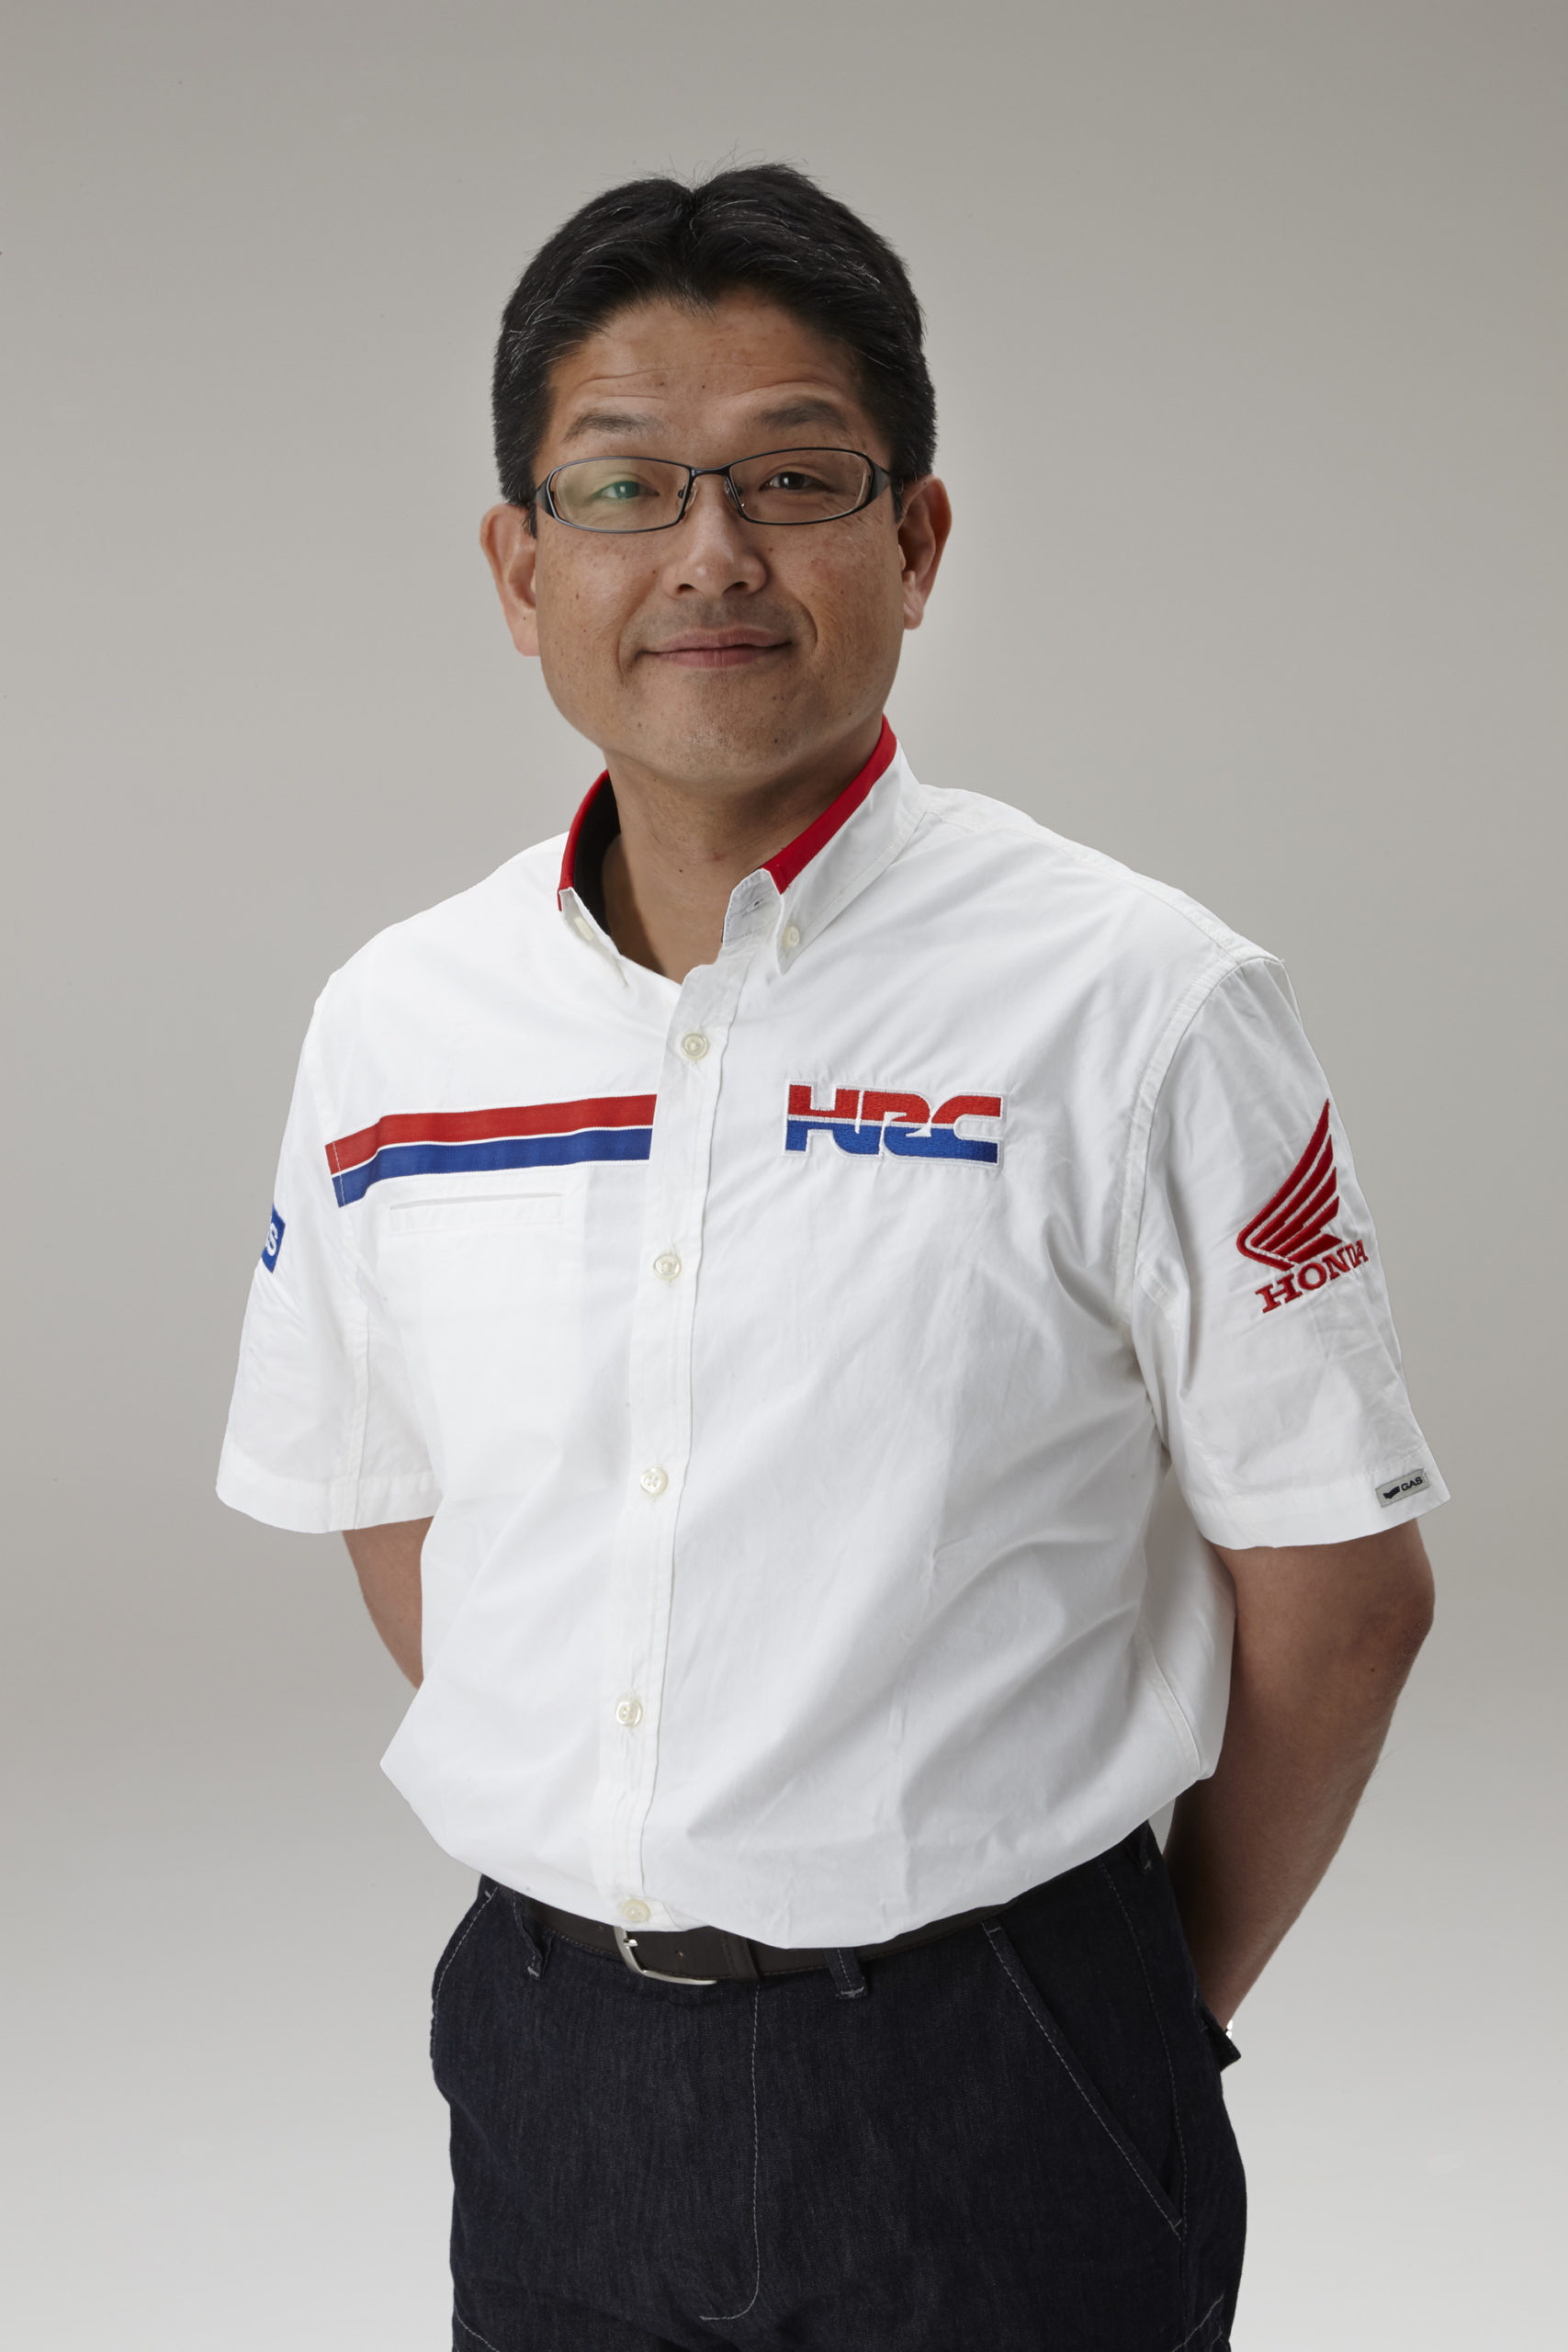 Yoshishige Nomura introduced as new HRC President